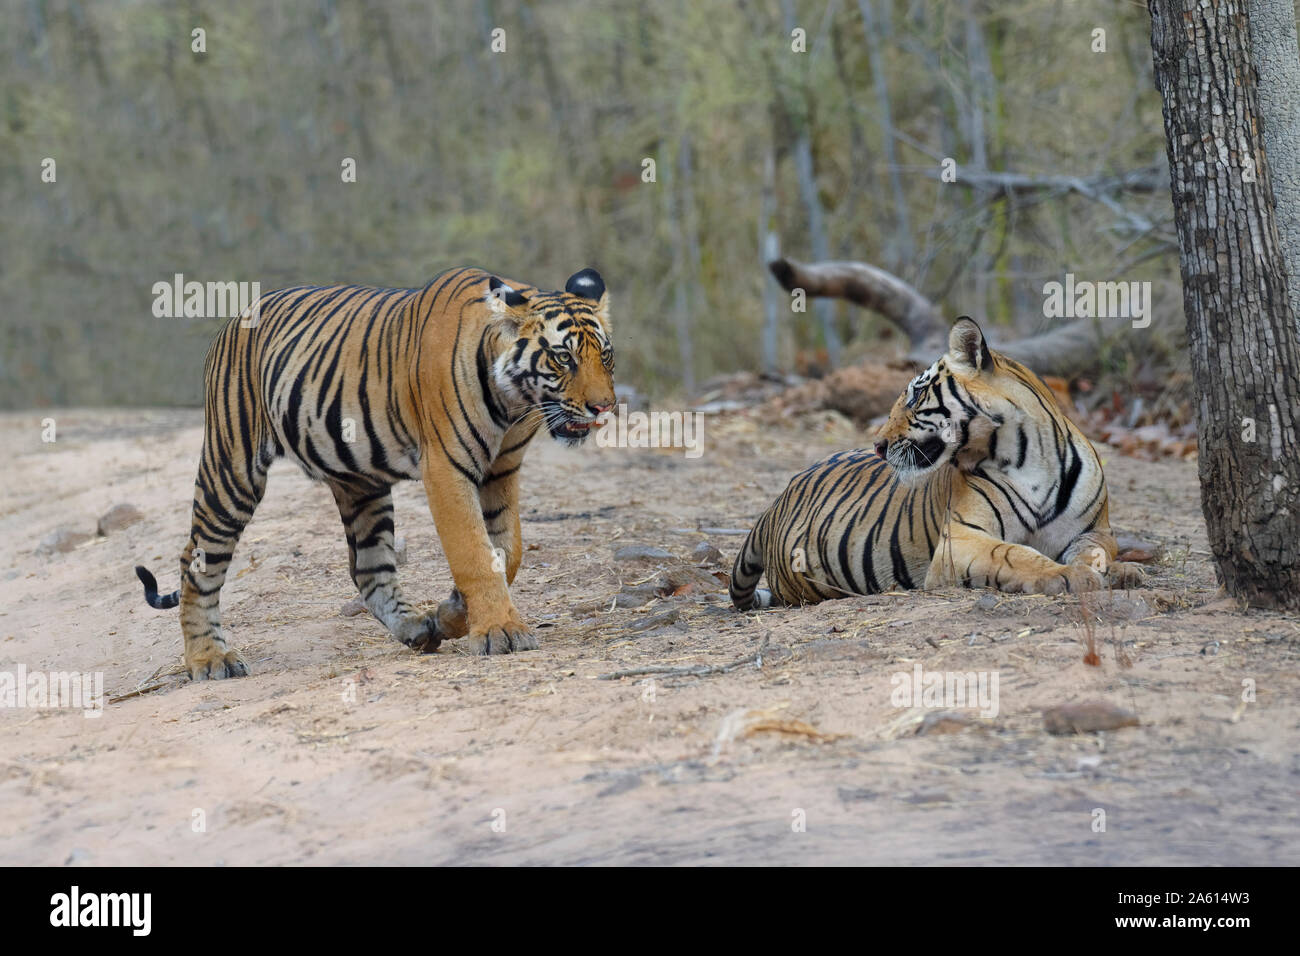 Due giovani le tigri del Bengala (Panthera tigris tigris) su un sentiero forestale Bandhavgarh National Park, Madhya Pradesh, India, Asia Foto Stock